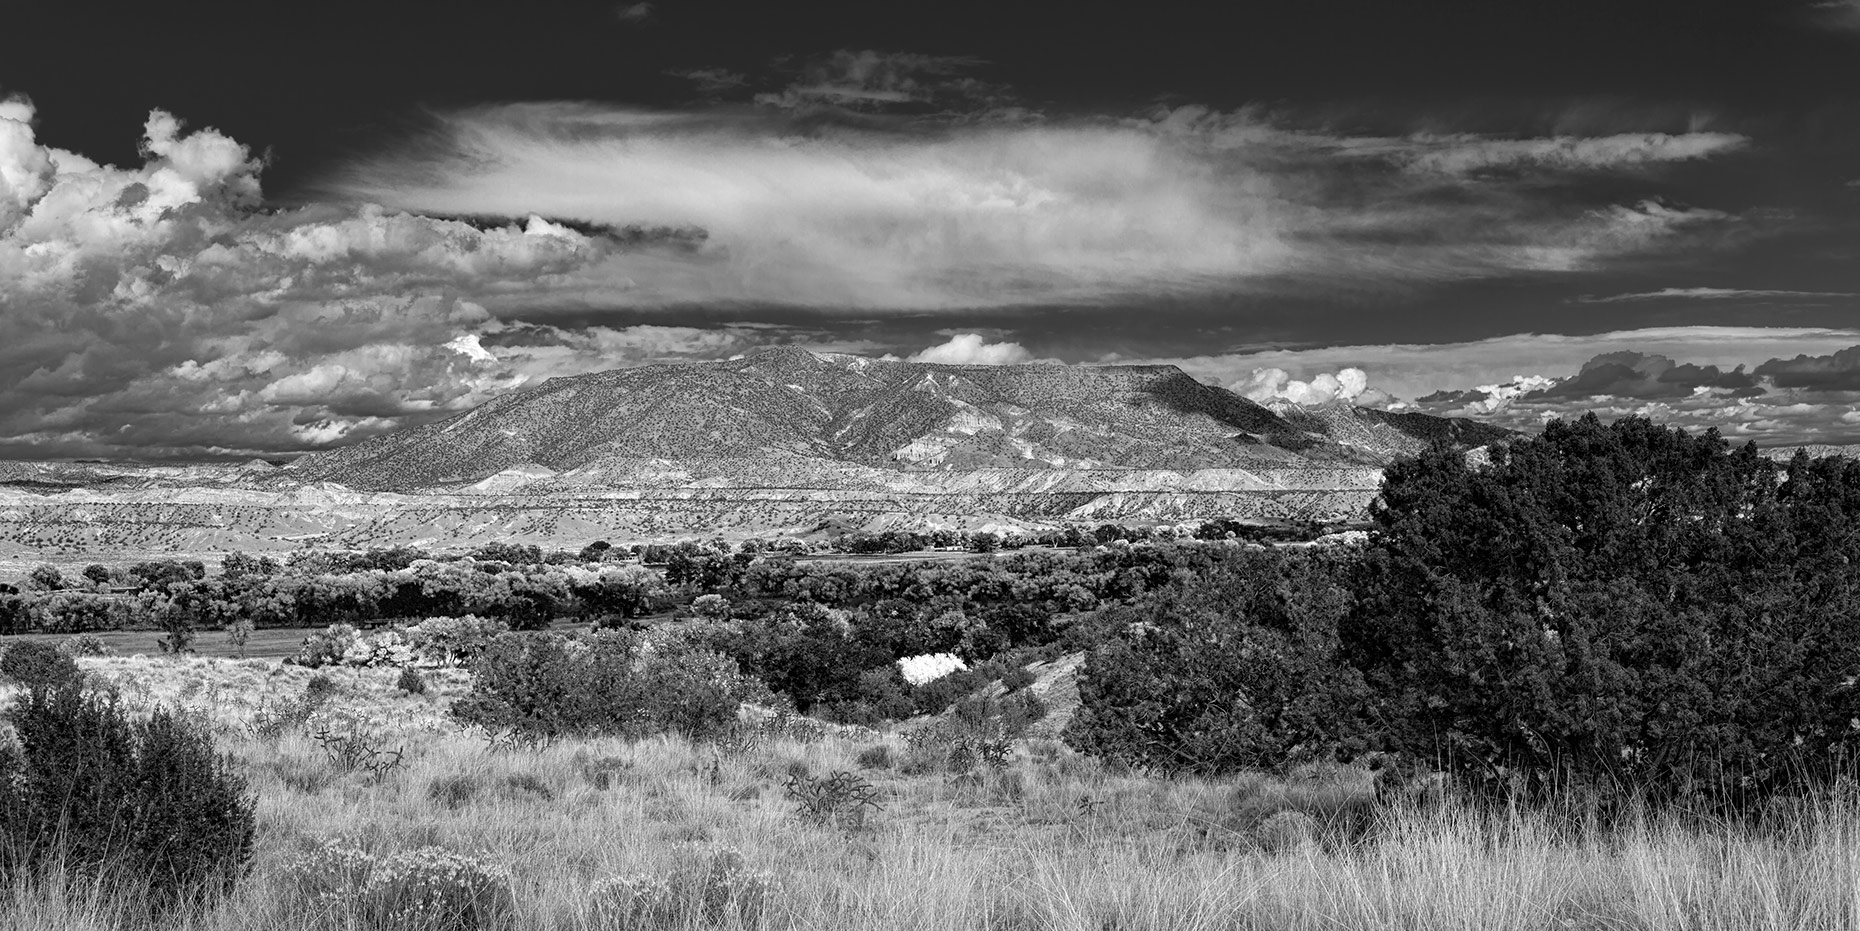 Santa Fe, New Mexico and surrounds